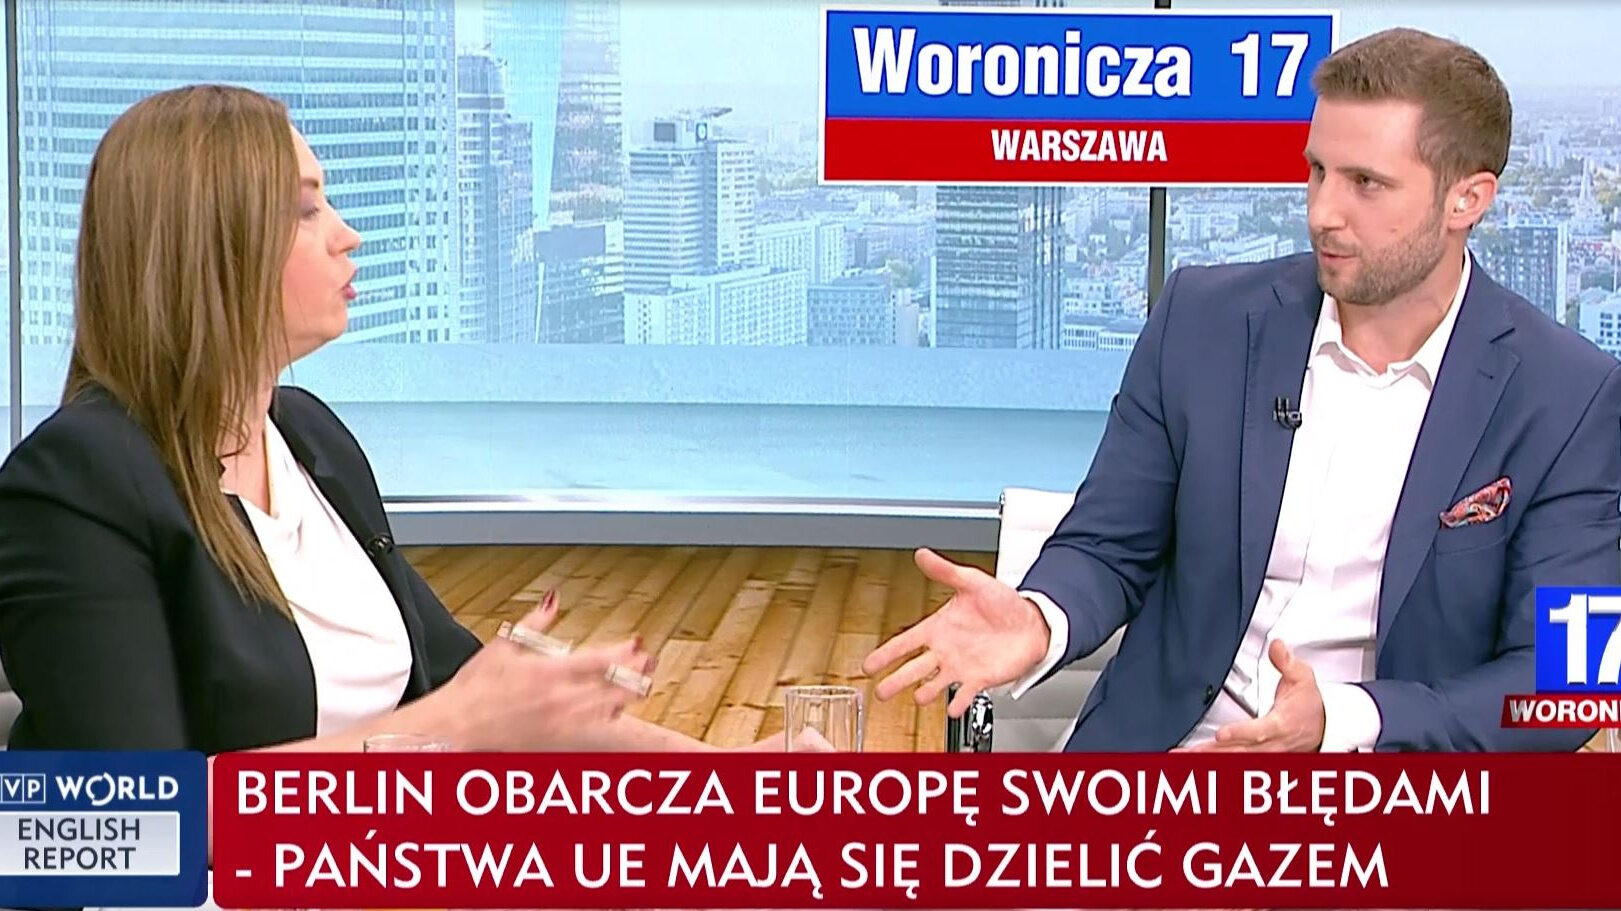 Quarrel on TVP Info about Szymon Hołownia’s words.  Polish politician 2050 accuses station of manipulation – Wprost